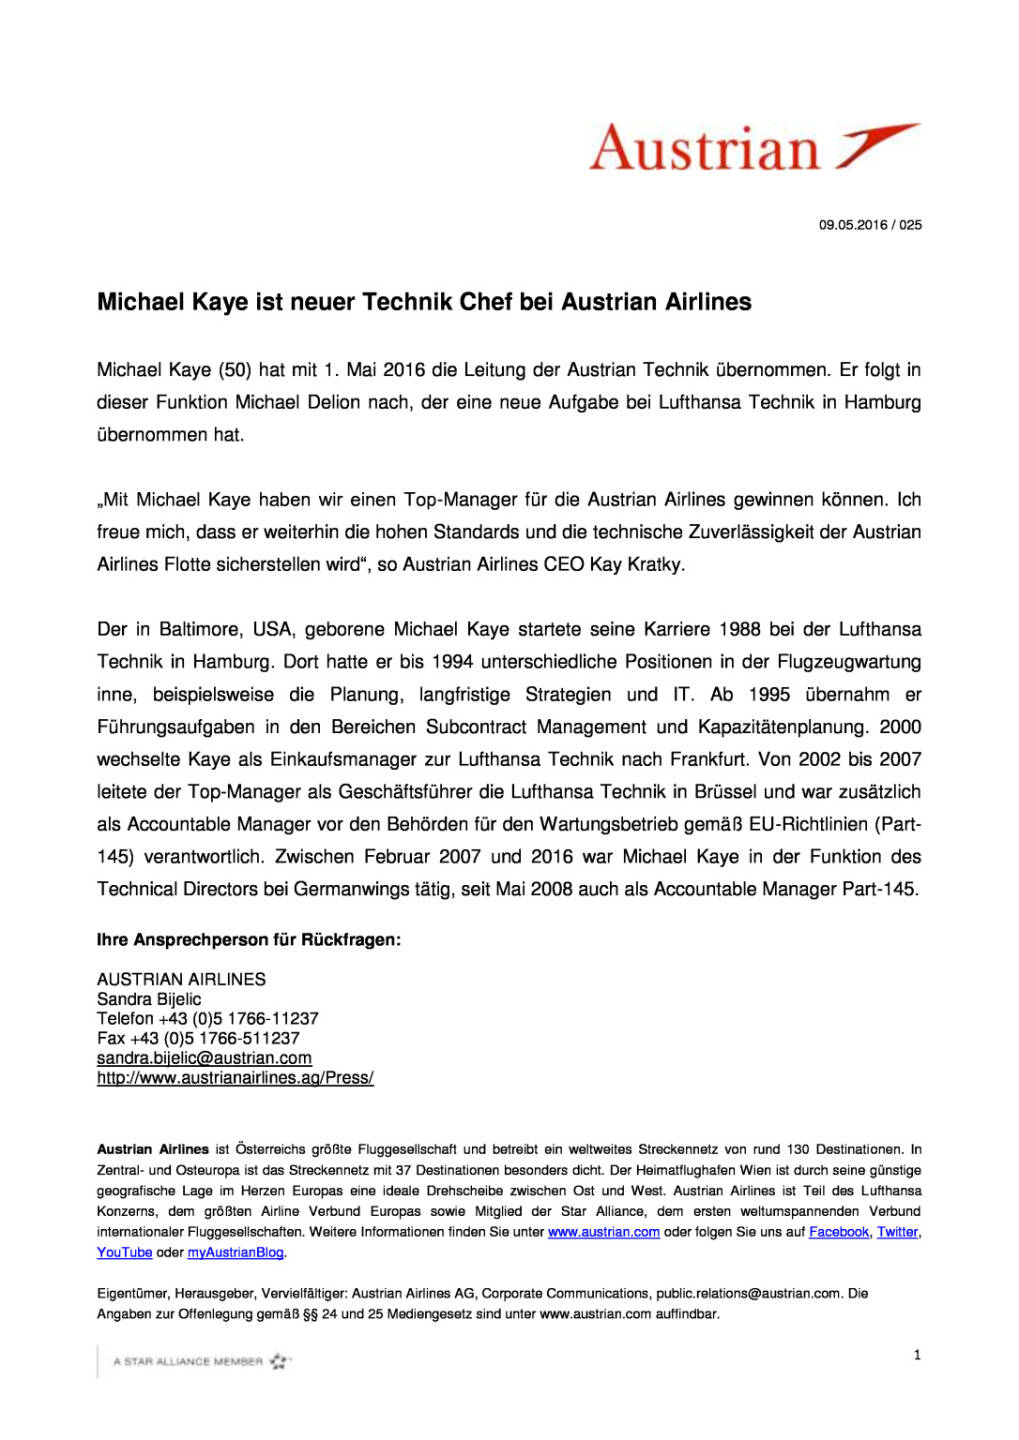 Austrian Airlines: Michael Kaye ist neuer Technik Chef, Seite 1/1, komplettes Dokument unter http://boerse-social.com/static/uploads/file_1019_austrian_airlines_michael_kaye_ist_neuer_technik_chef.pdf